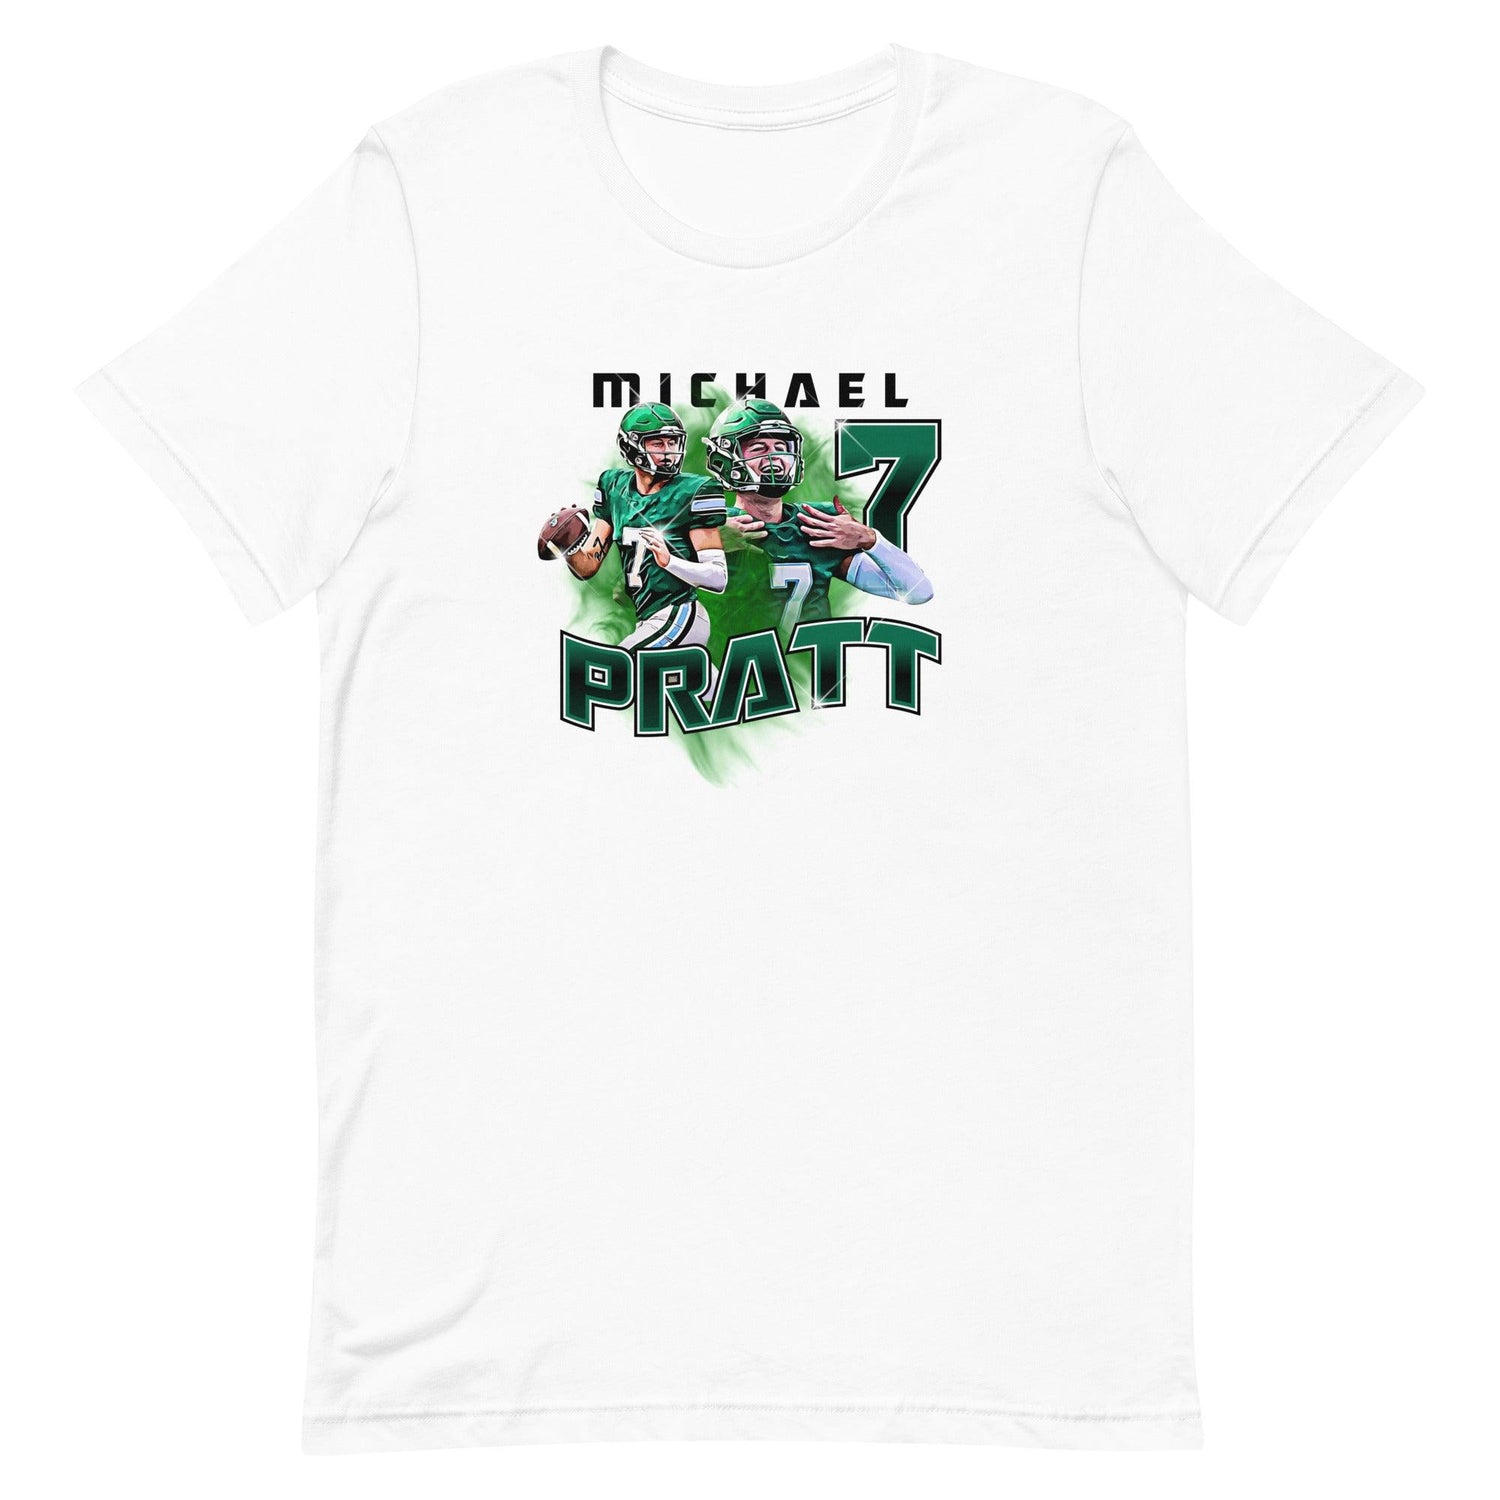 Michael Pratt "Limited Edition" t-shirt - Fan Arch